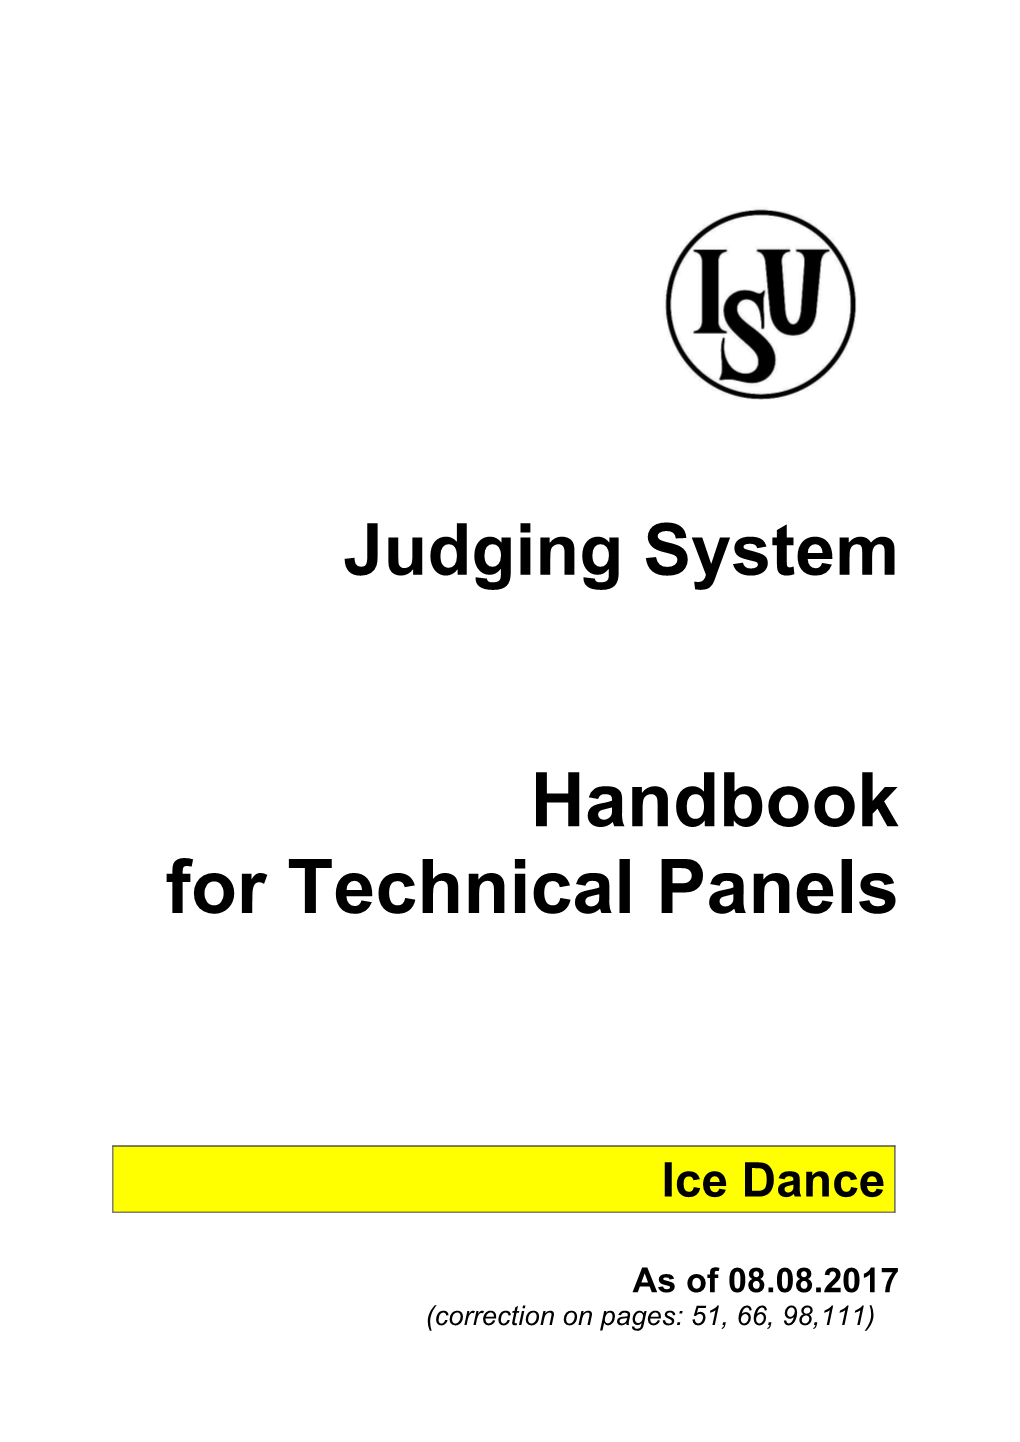 Handbook for Technical Panels